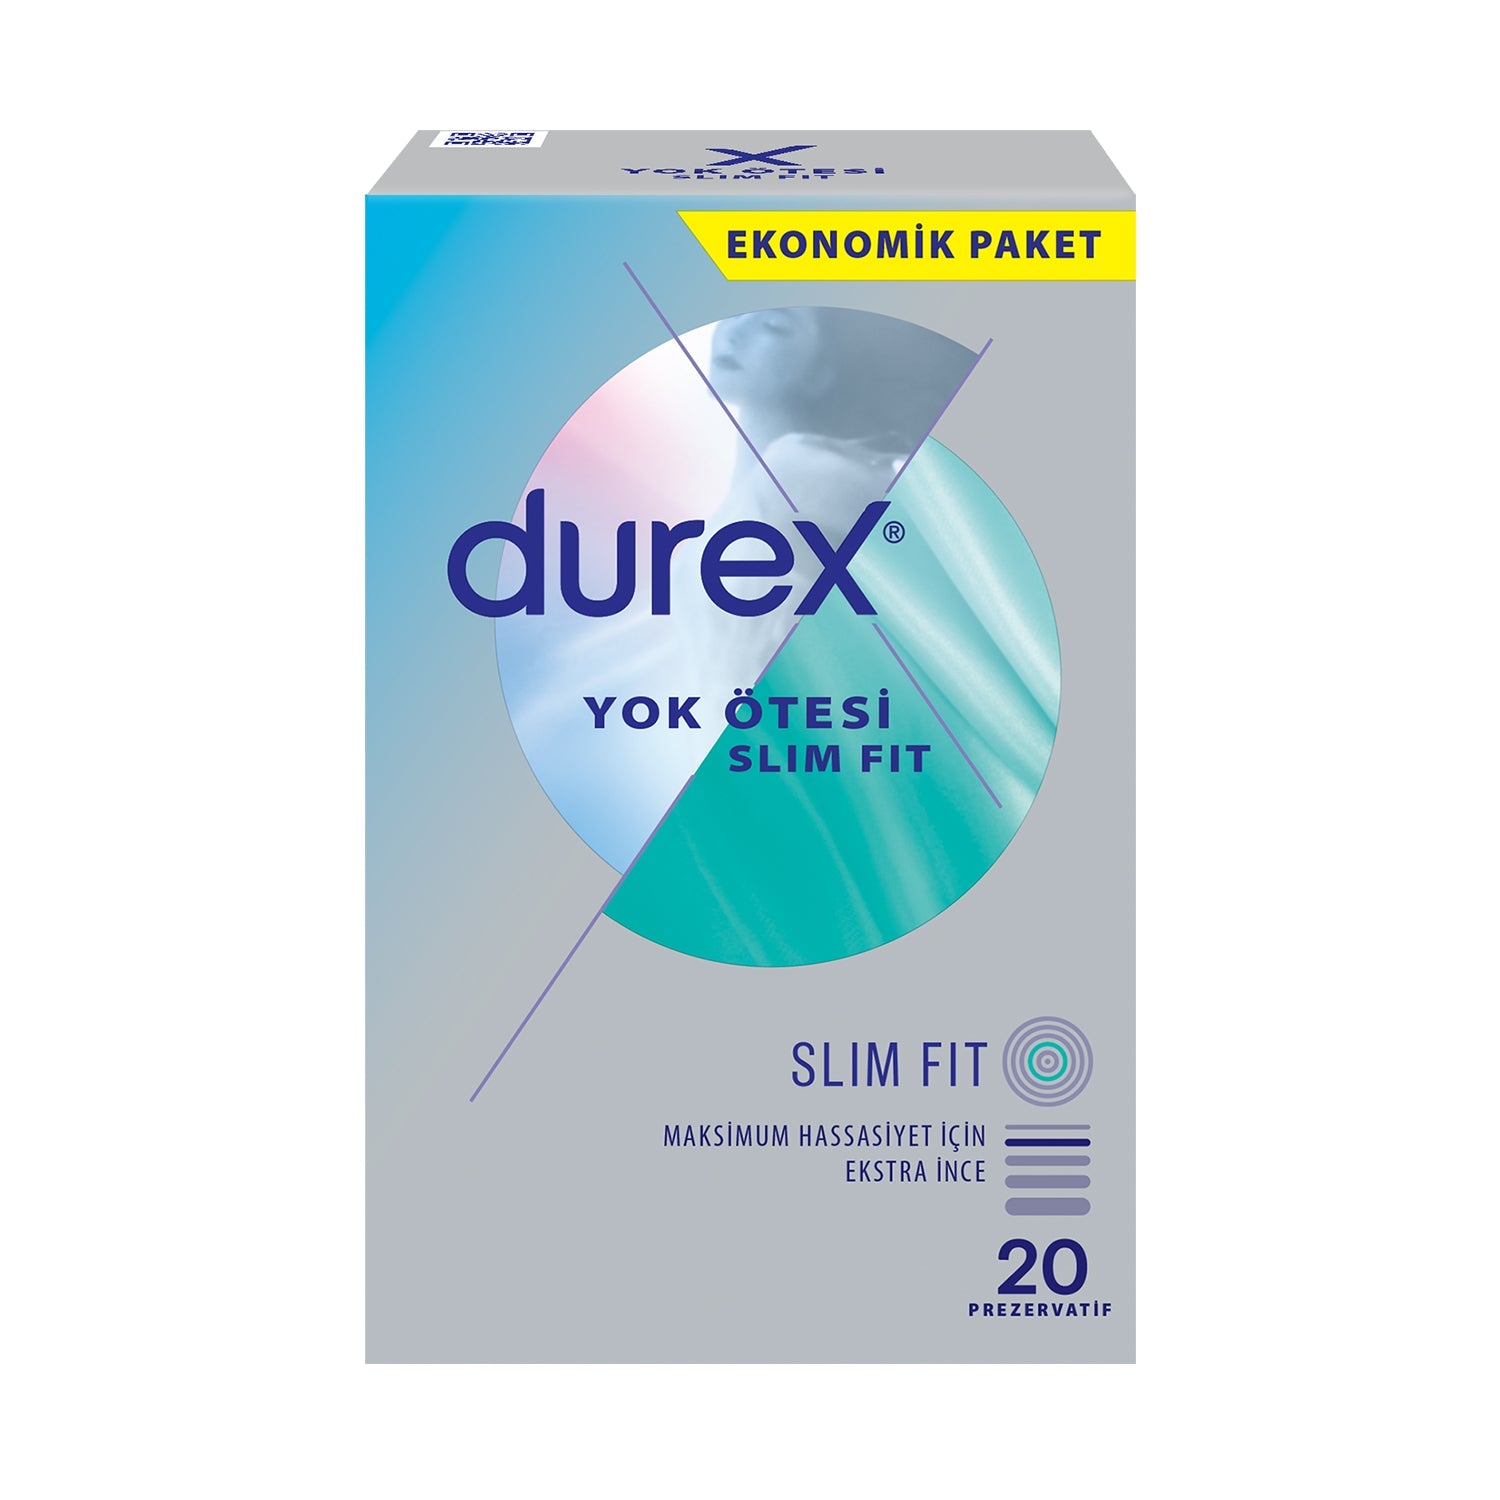 Durex Yok Ötesi Slim Fit 20’li Prezervatif